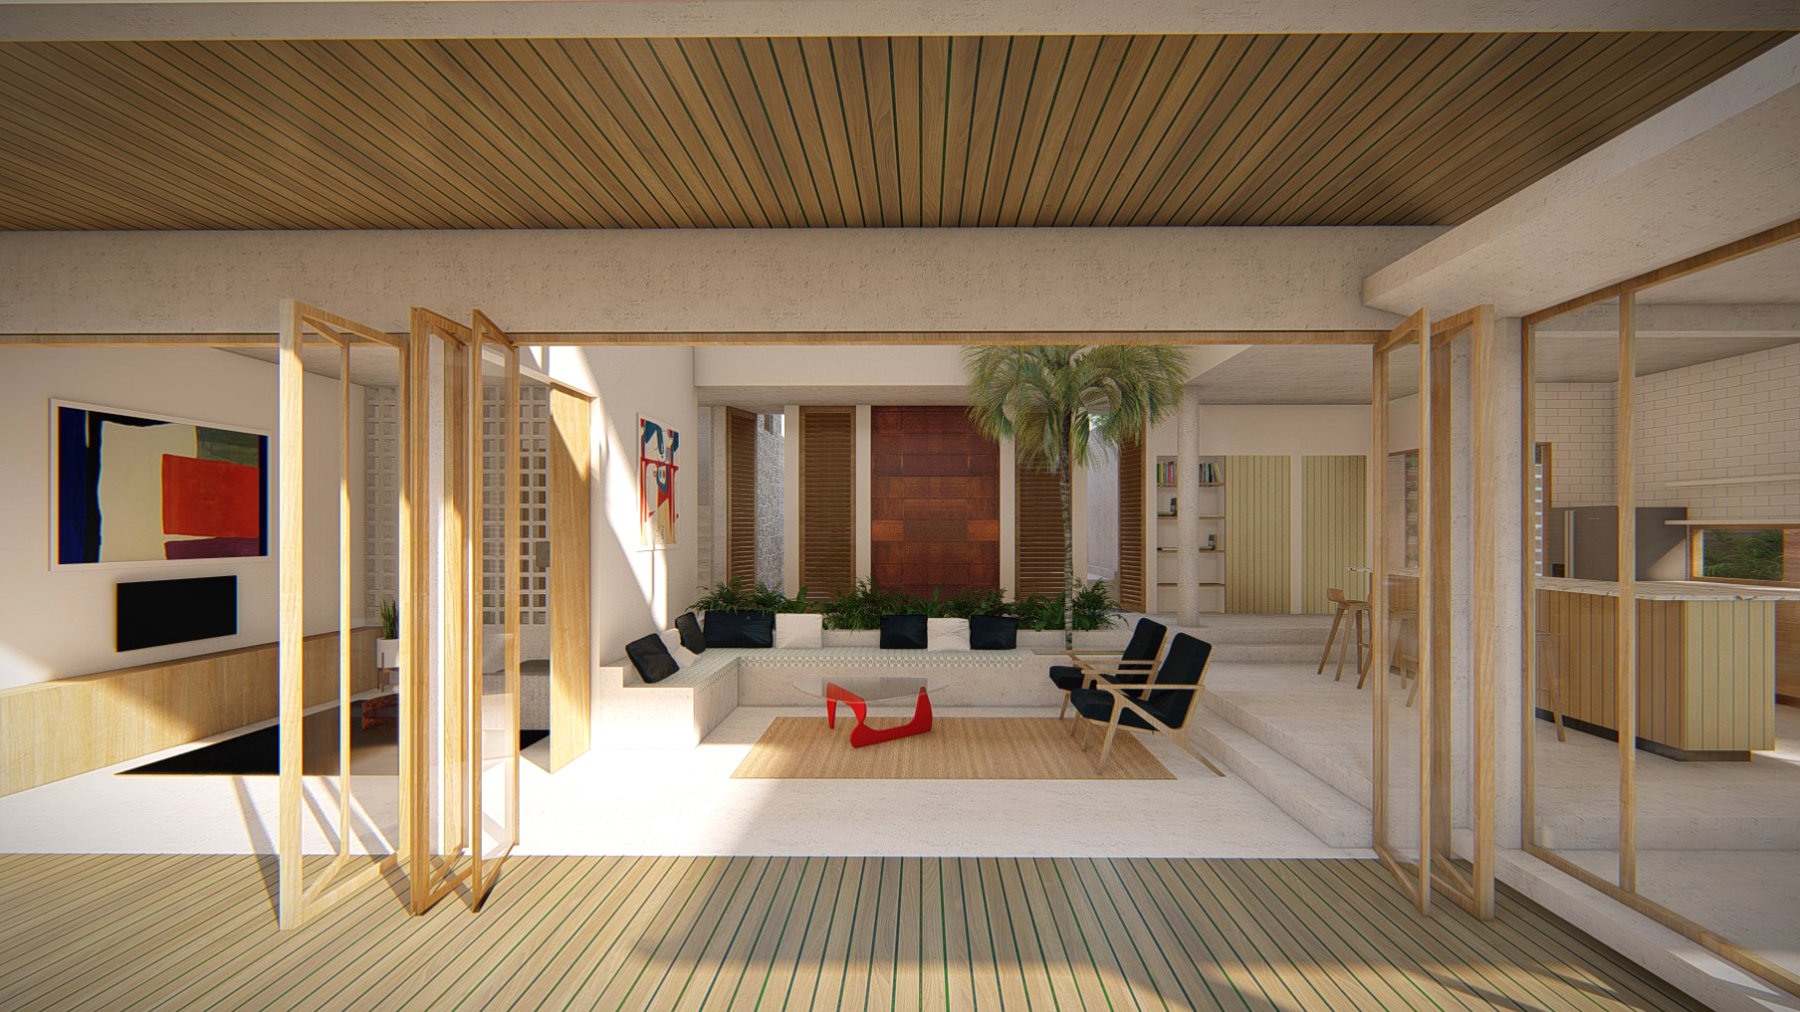 Design Assembly - Tumbak Bayuh House - Bali Architect - Interior Design - Bali Villa - Living Room